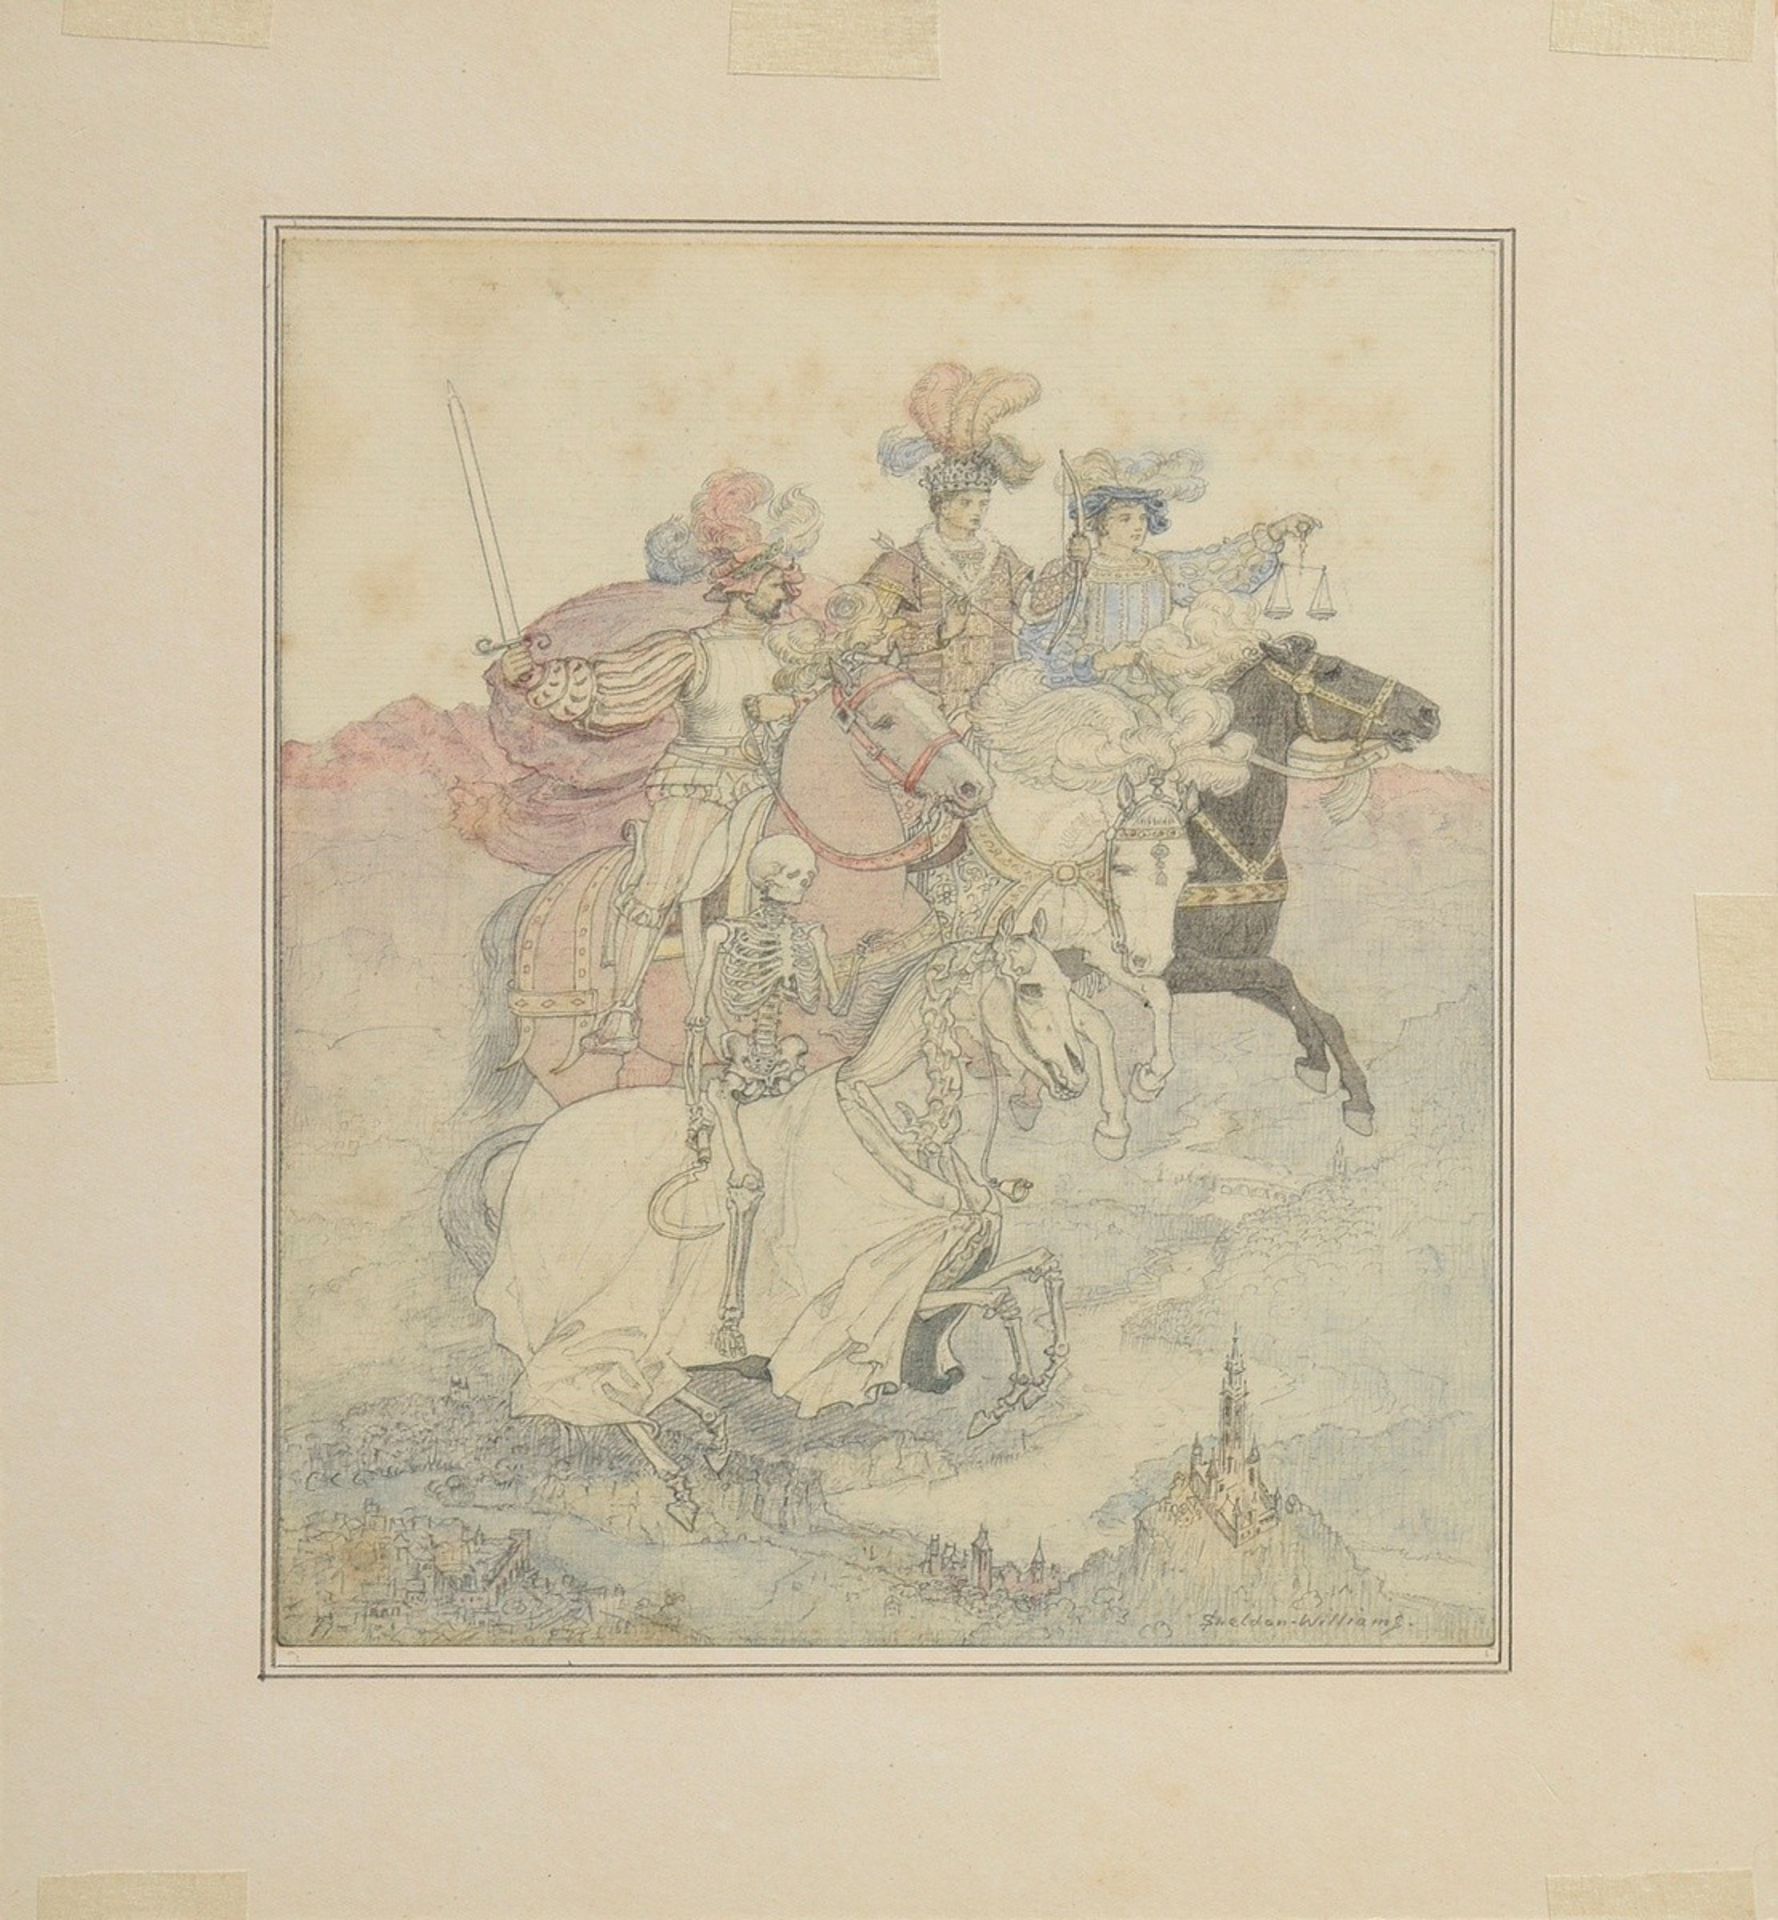 Sheldon-Williams, Inglis (1890-1940) "The Four Horsemen of the Apocalypse", watercoloured pencil an - Image 2 of 4